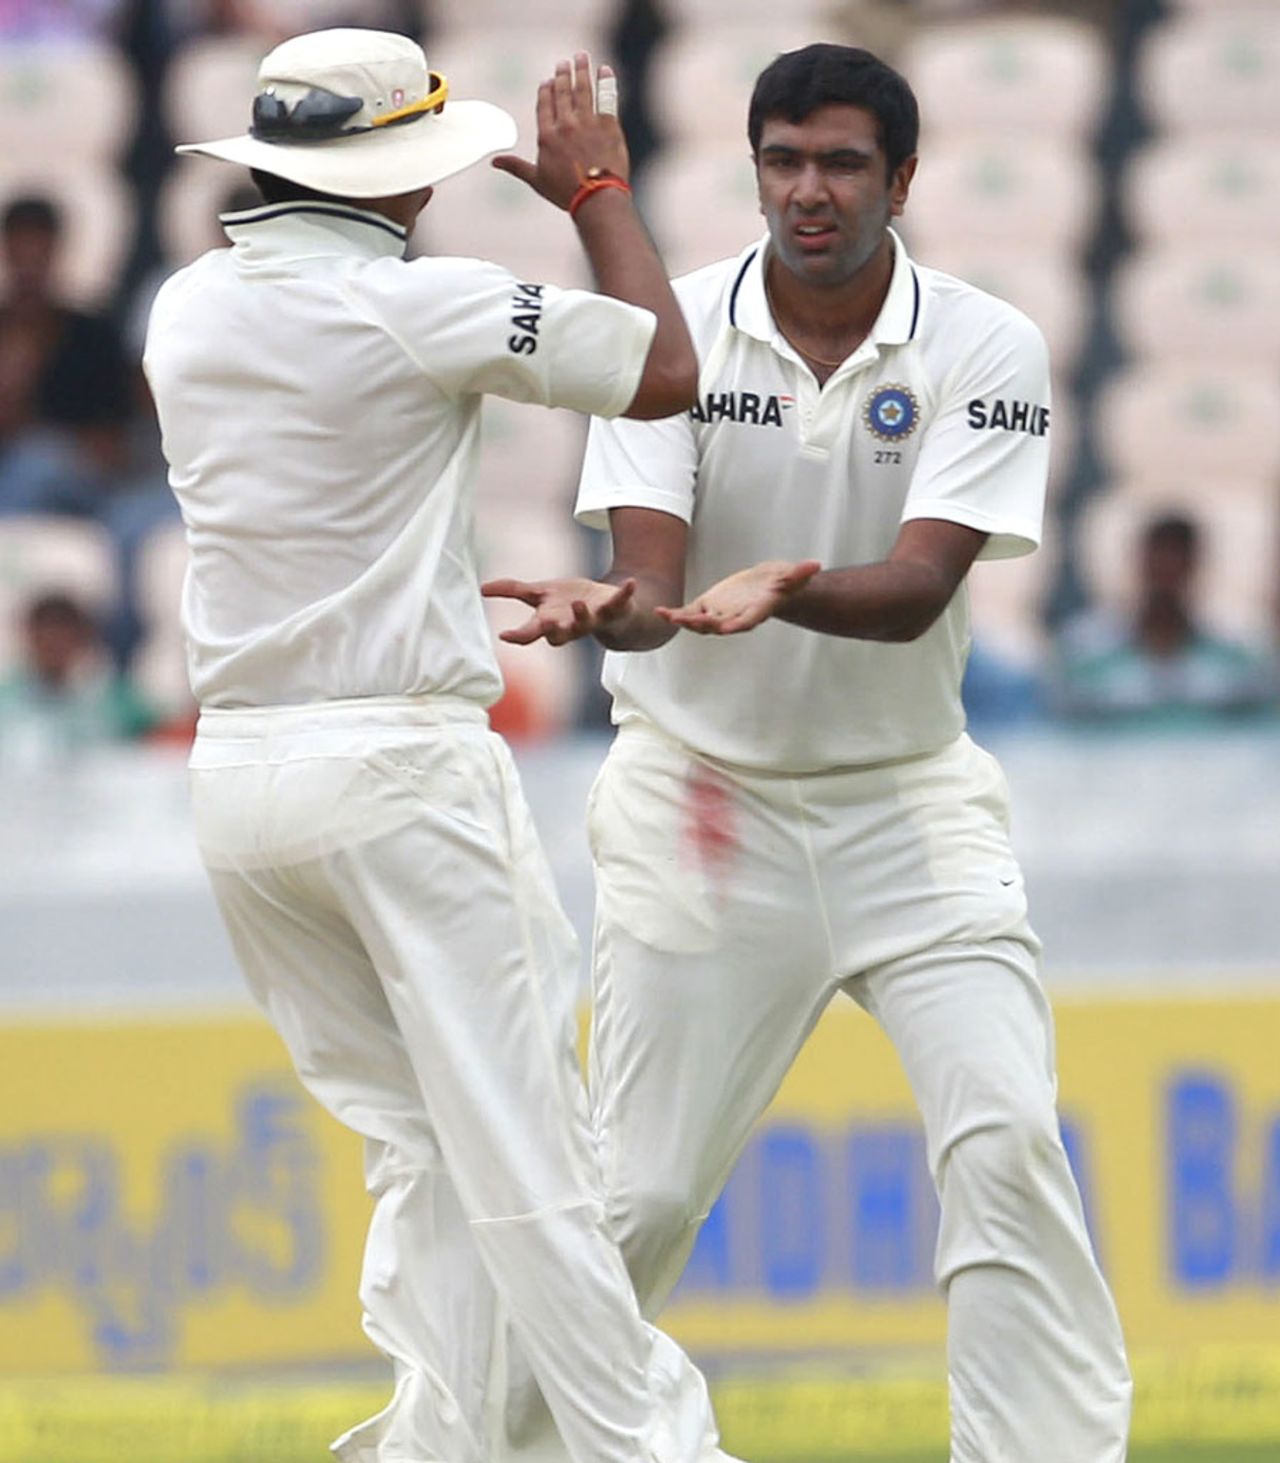 R Ashwin celebrates after dismissing Jeetan Patel, India v Australia, 1st Test, Hyderabad, 3rd day, August 25, 2012